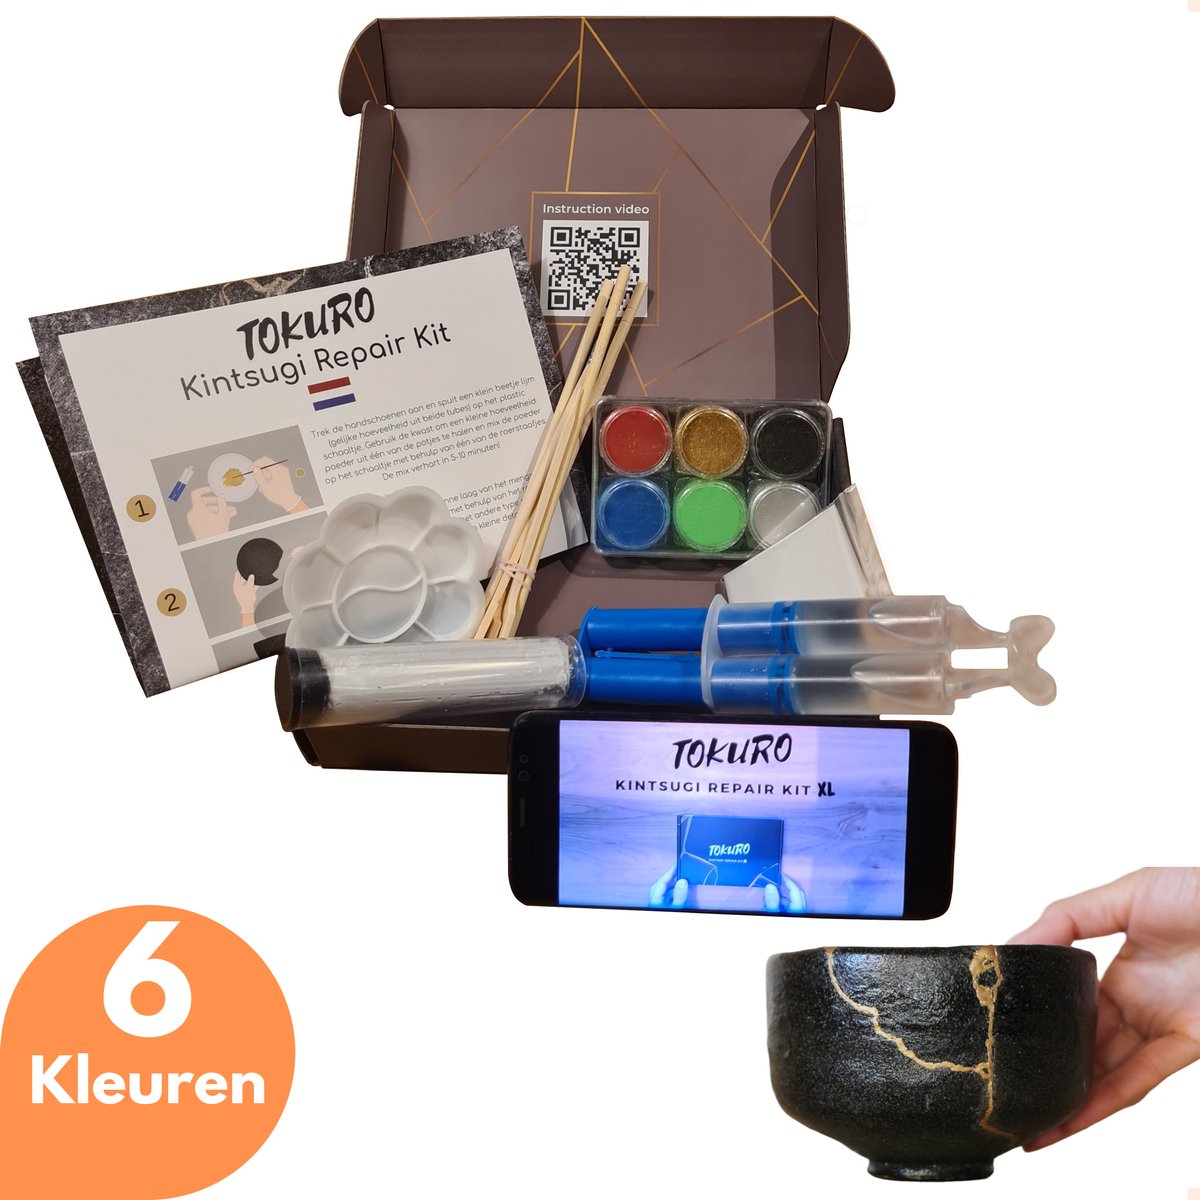 Tokuro Kintsugi Repair Kit XL - Bio Repair Kit - 6 Kleuren: Goud, Zilver, Zwart, Rood, Blauw, Groen - Goudlijm - Keramiek - DIY Kintsugi Kit - Voedselveilig - Vaatwasserbestendig - Tokuro